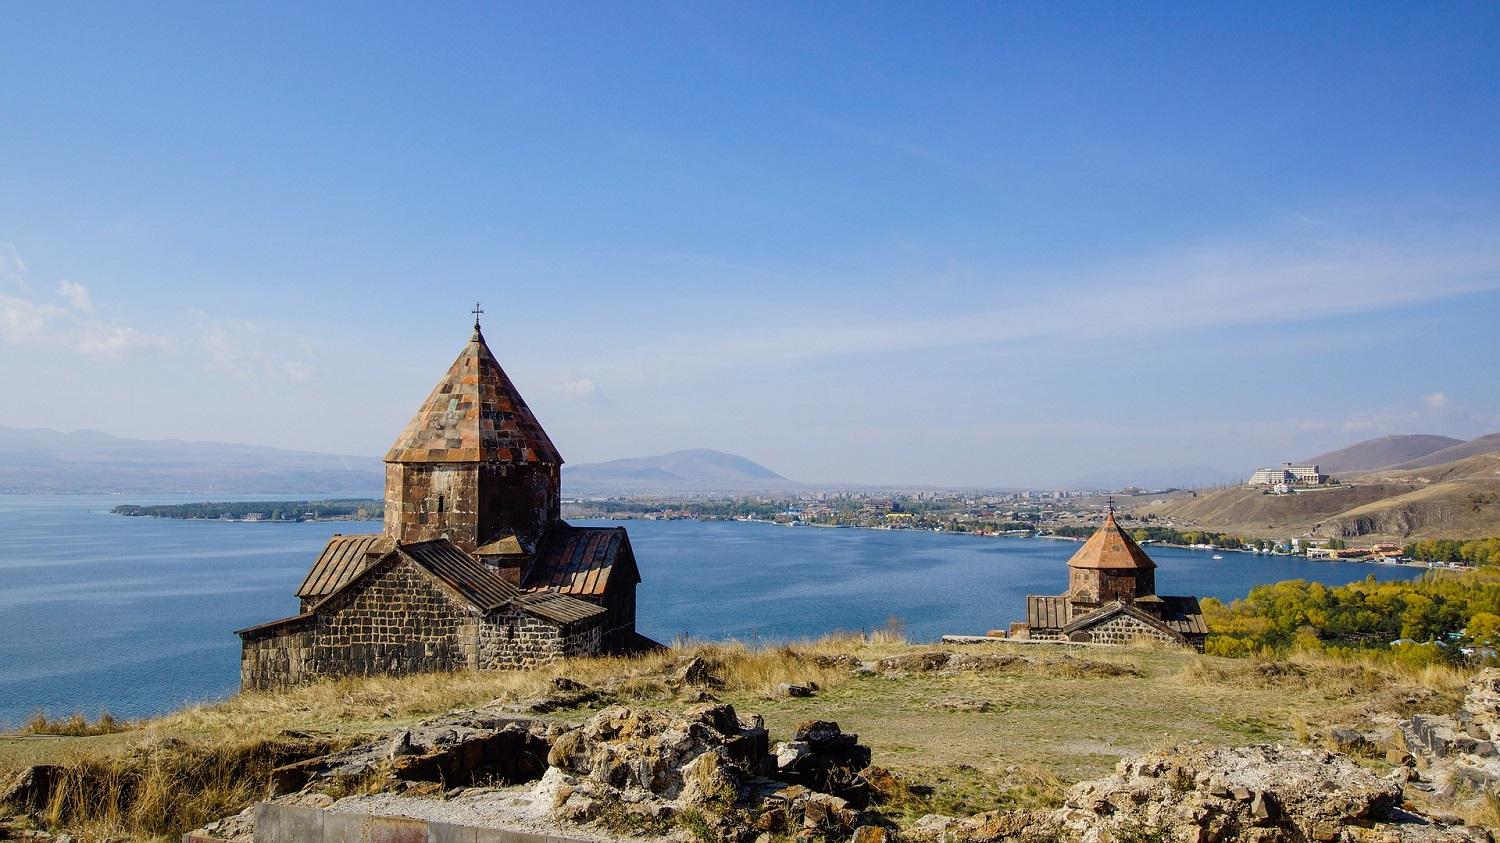 Armenia - Traveler view, Travelers' Health